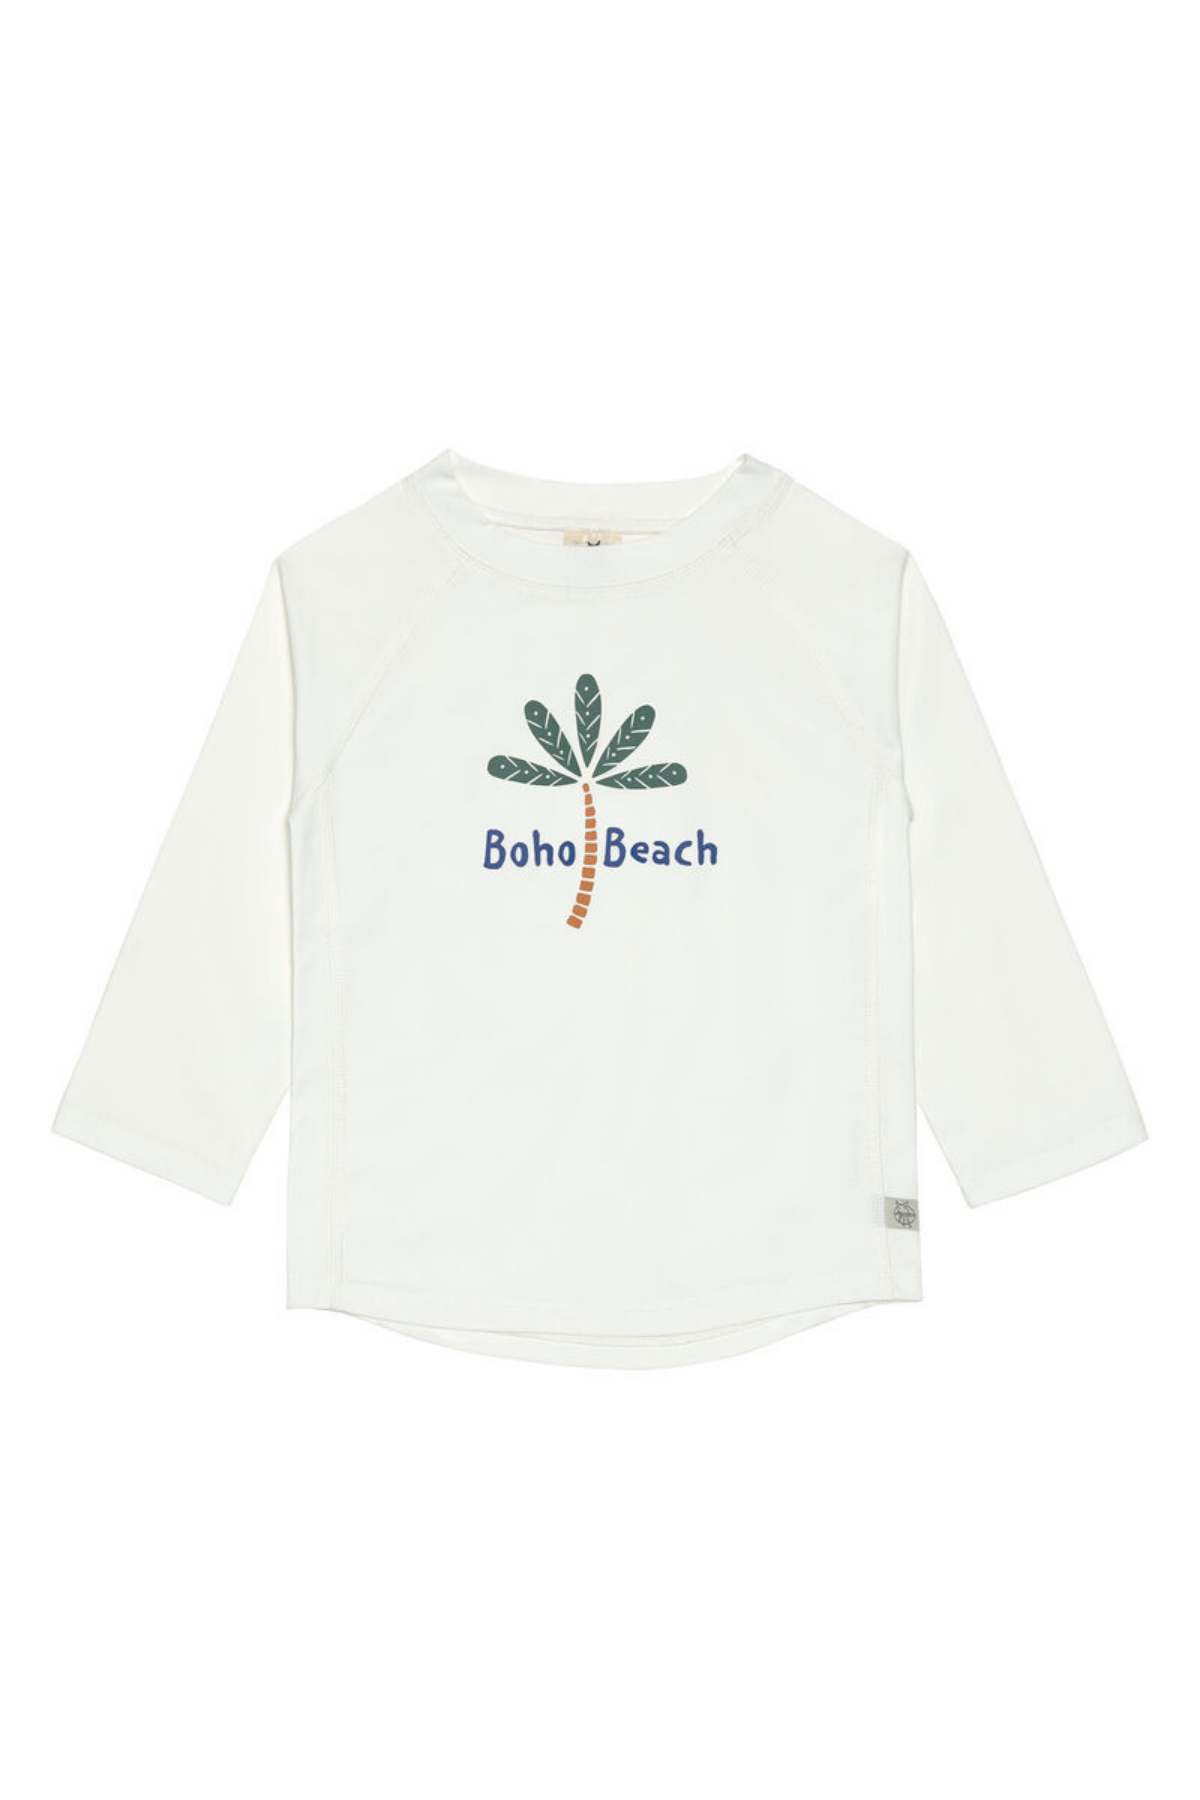 UV Long Sleeve Rashguard "Boho Beach"